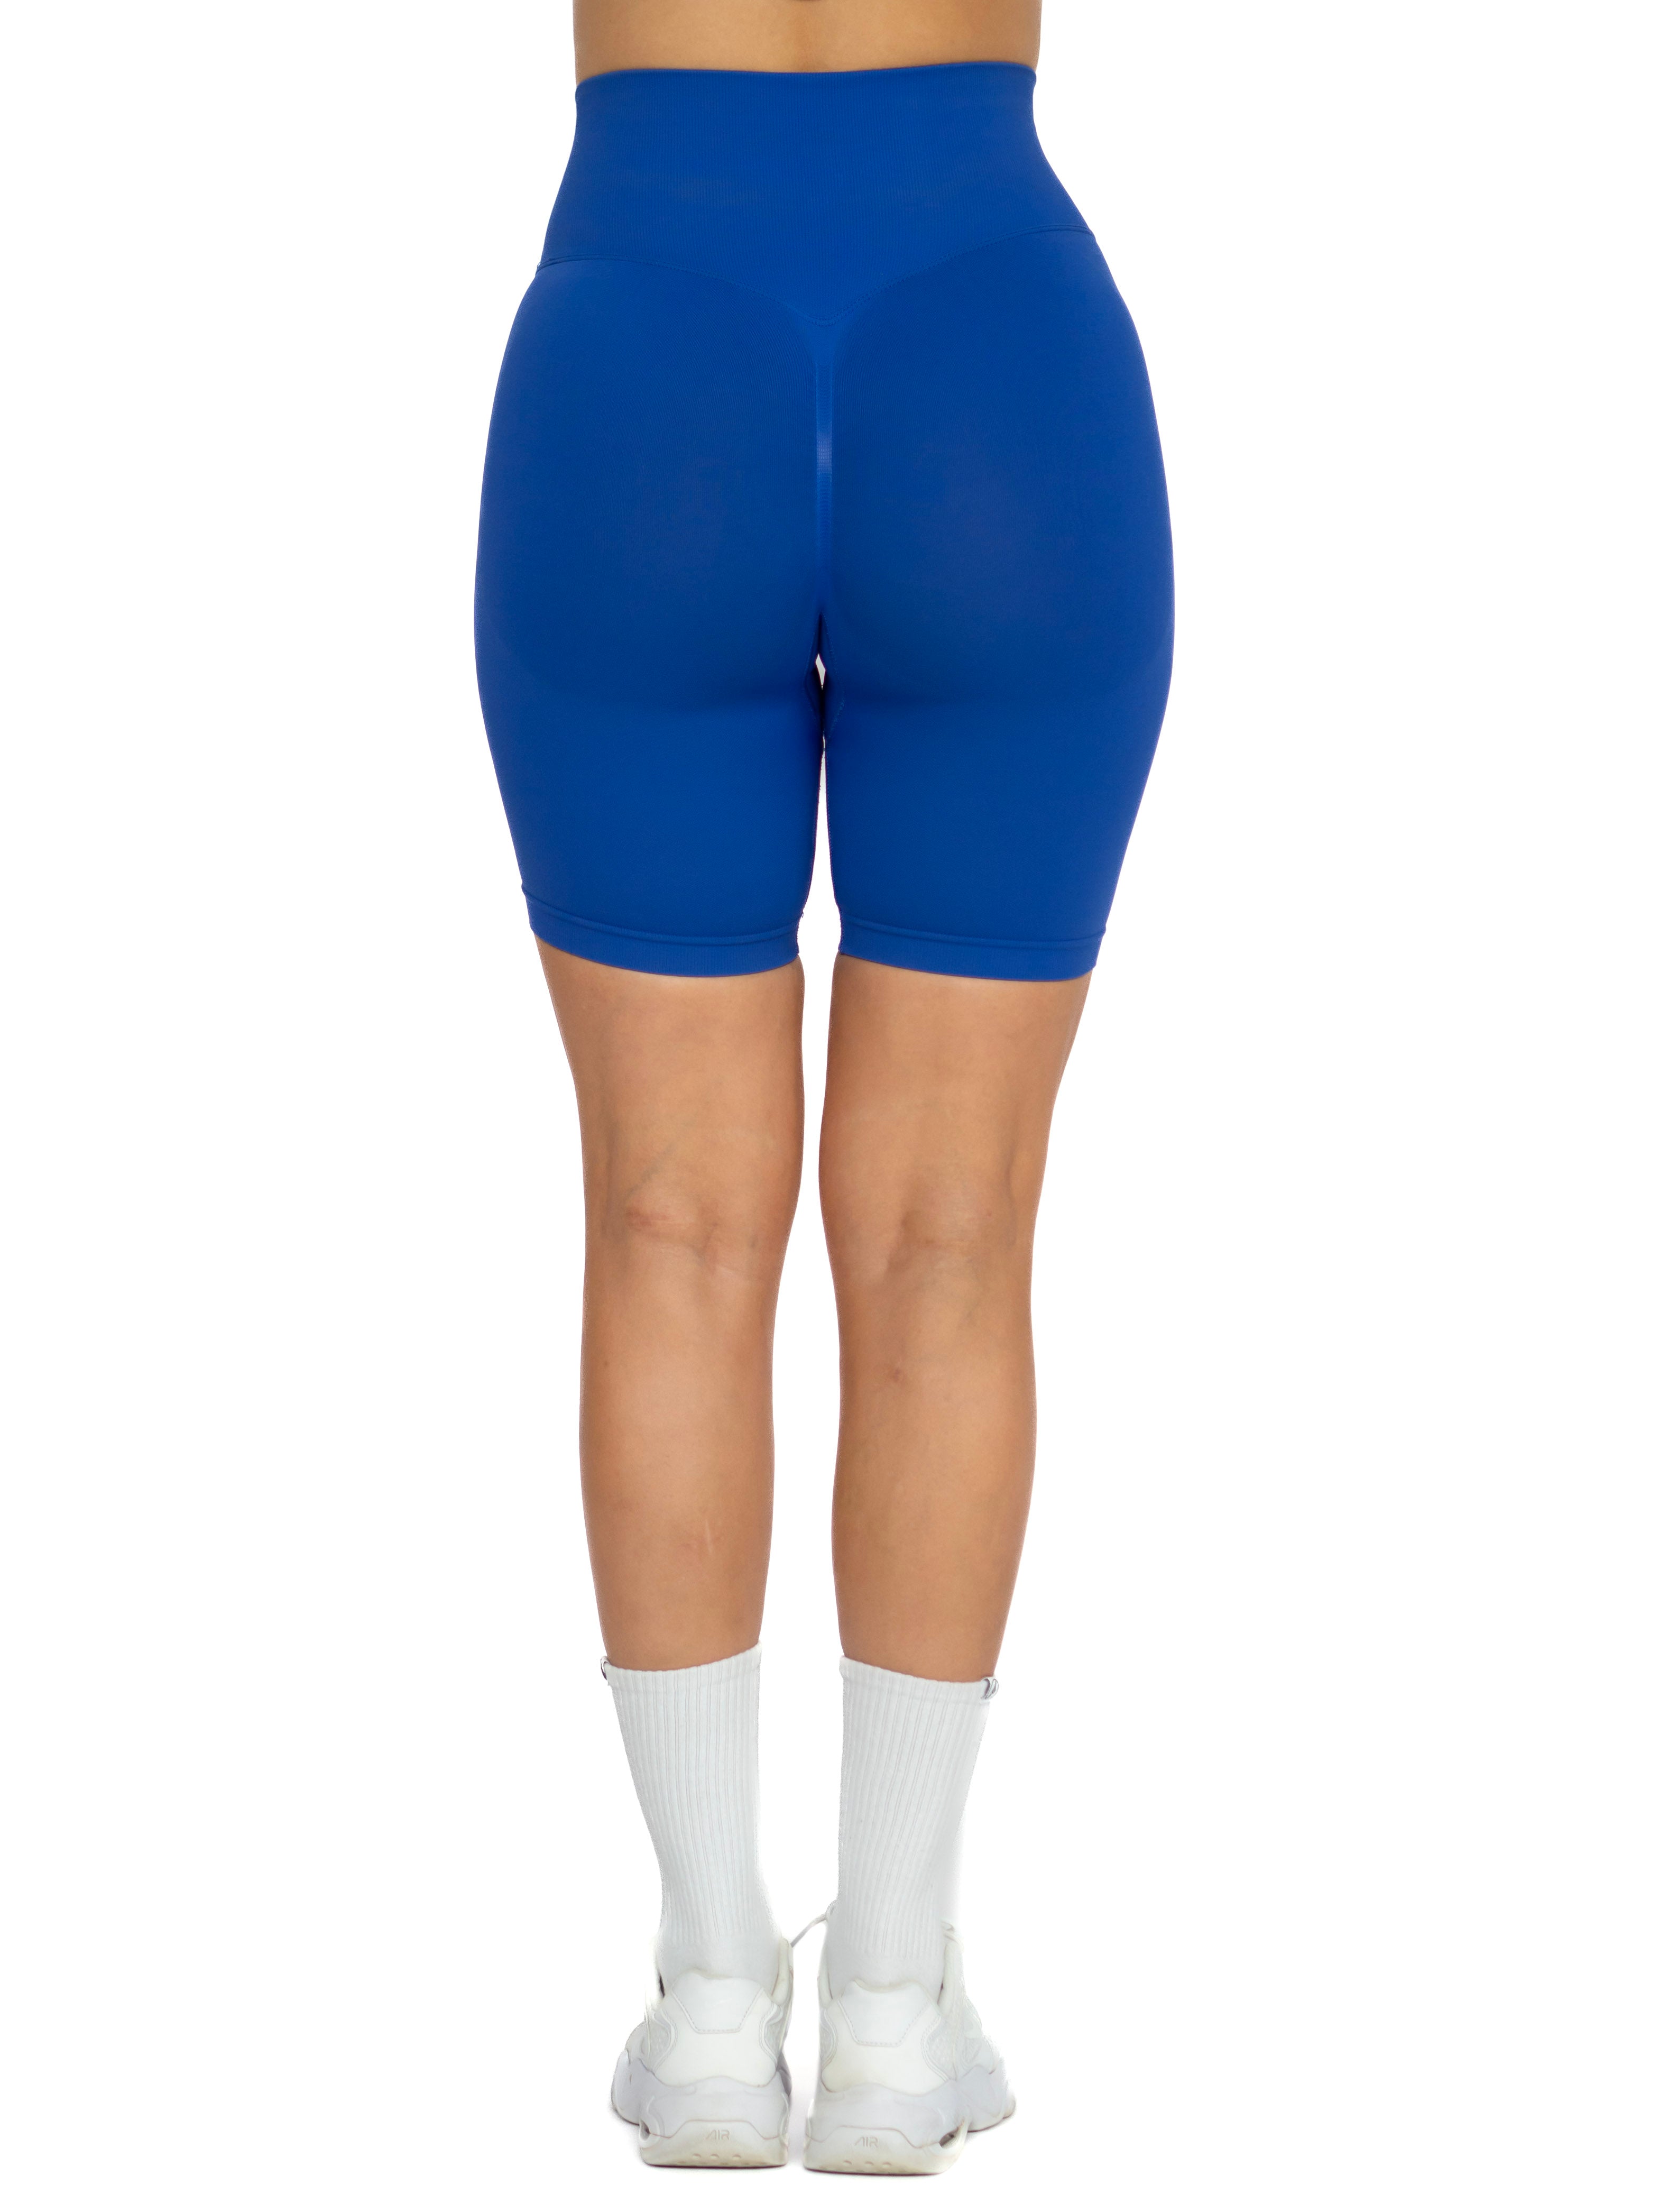 Perfect Peachy Biker Shorts - Royal Blue